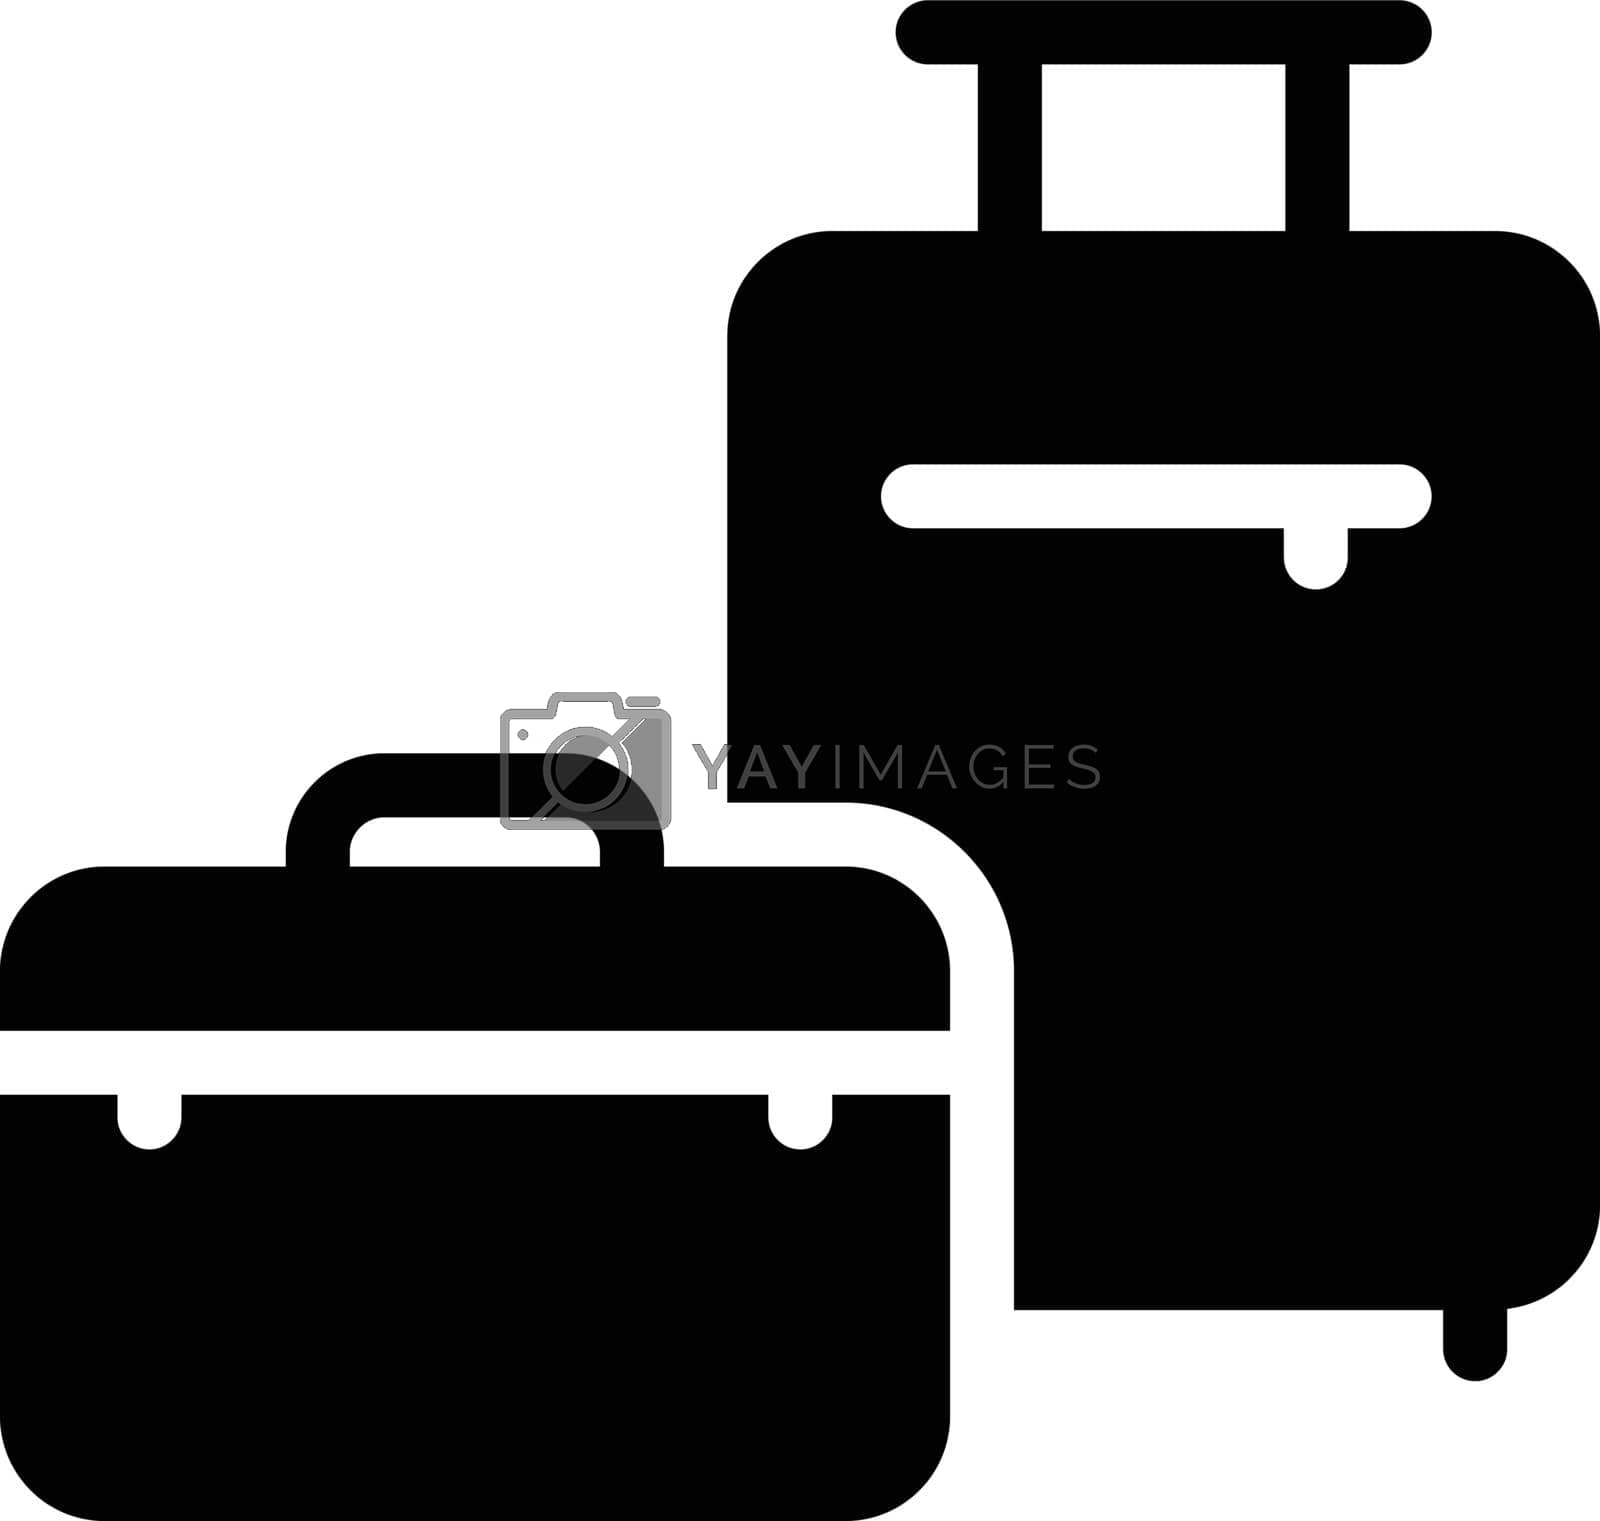 Royalty free image of luggage by FlaticonsDesign